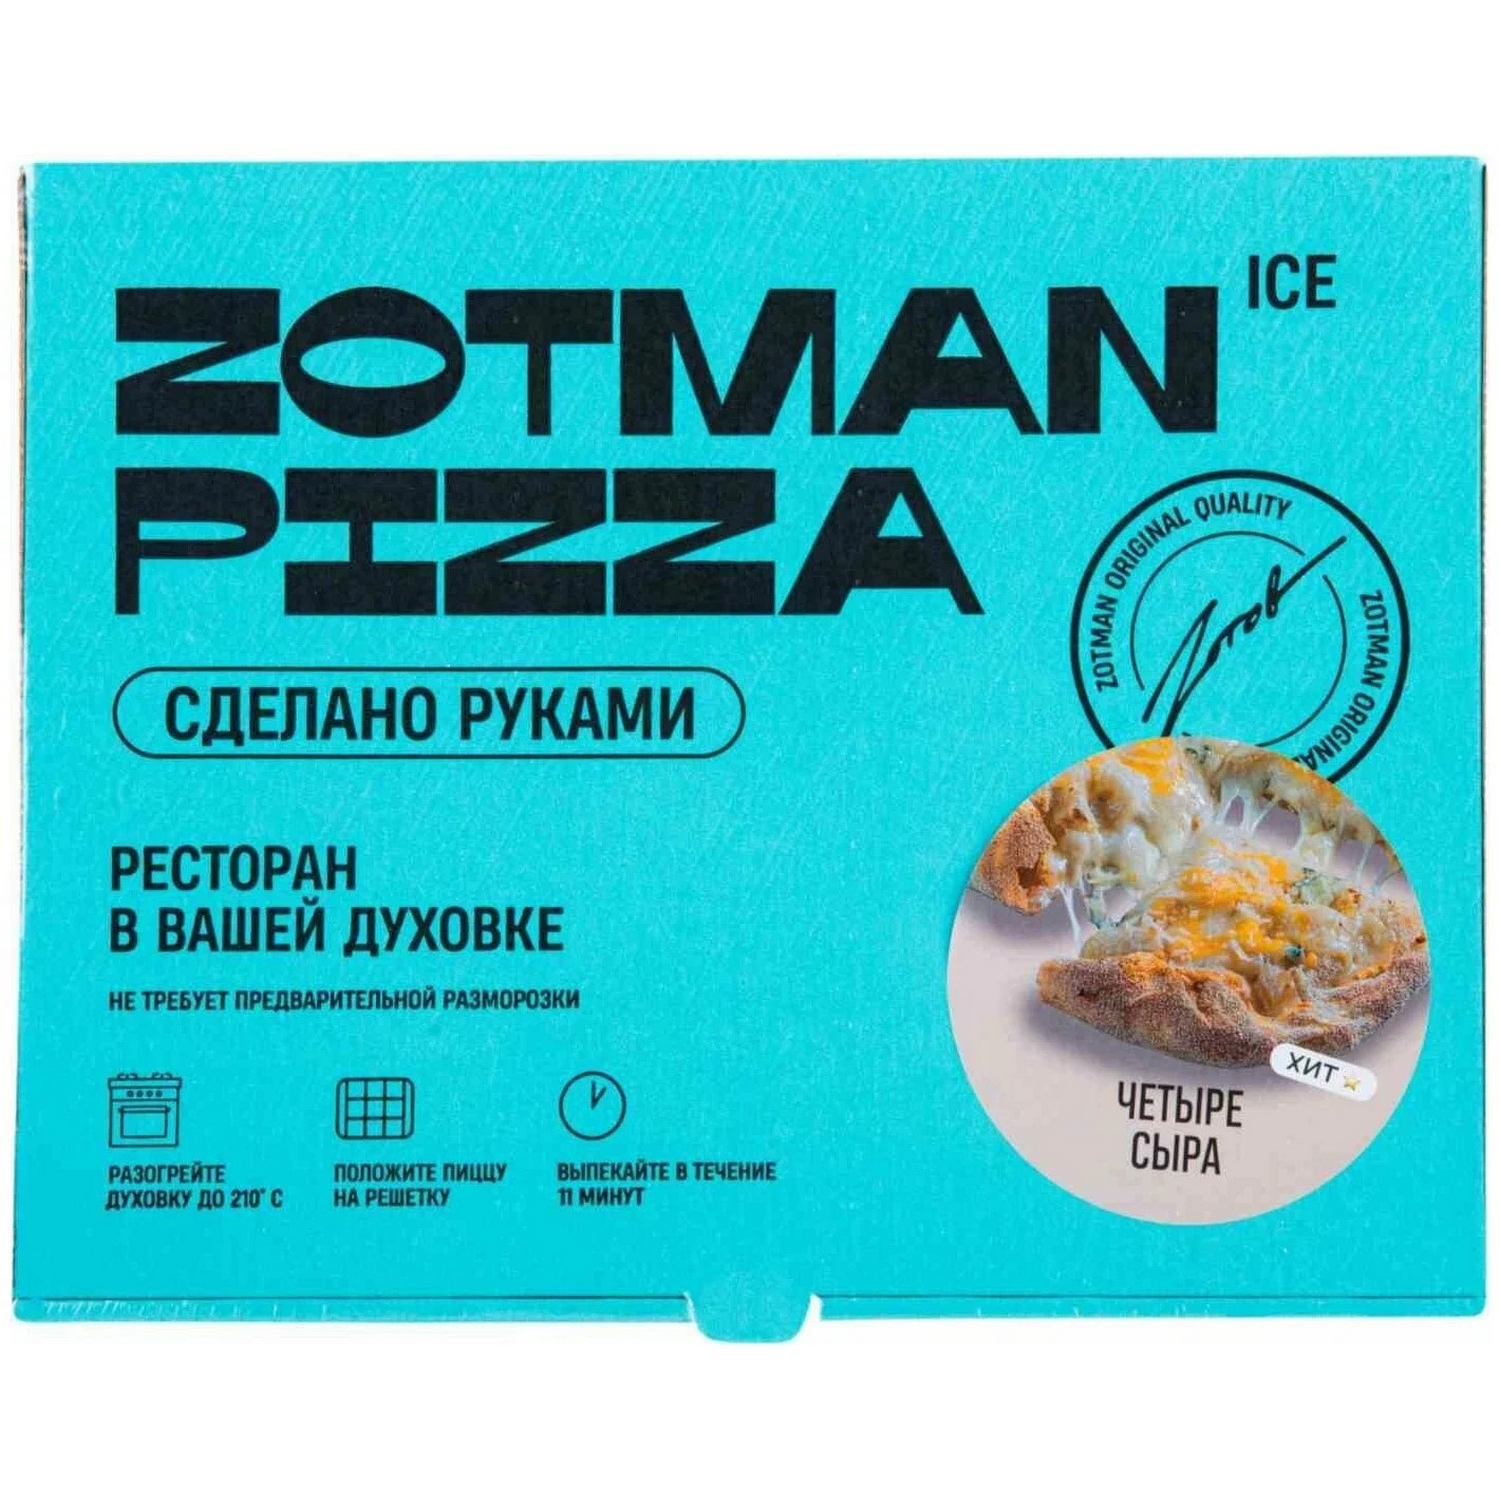 Зотман пепперони. Зотман 4 сыра. Пицца 4 сыра Zotman pizza, 395 гр. Зотман пицца 4 сыра. Пицца Зотман замороженная.